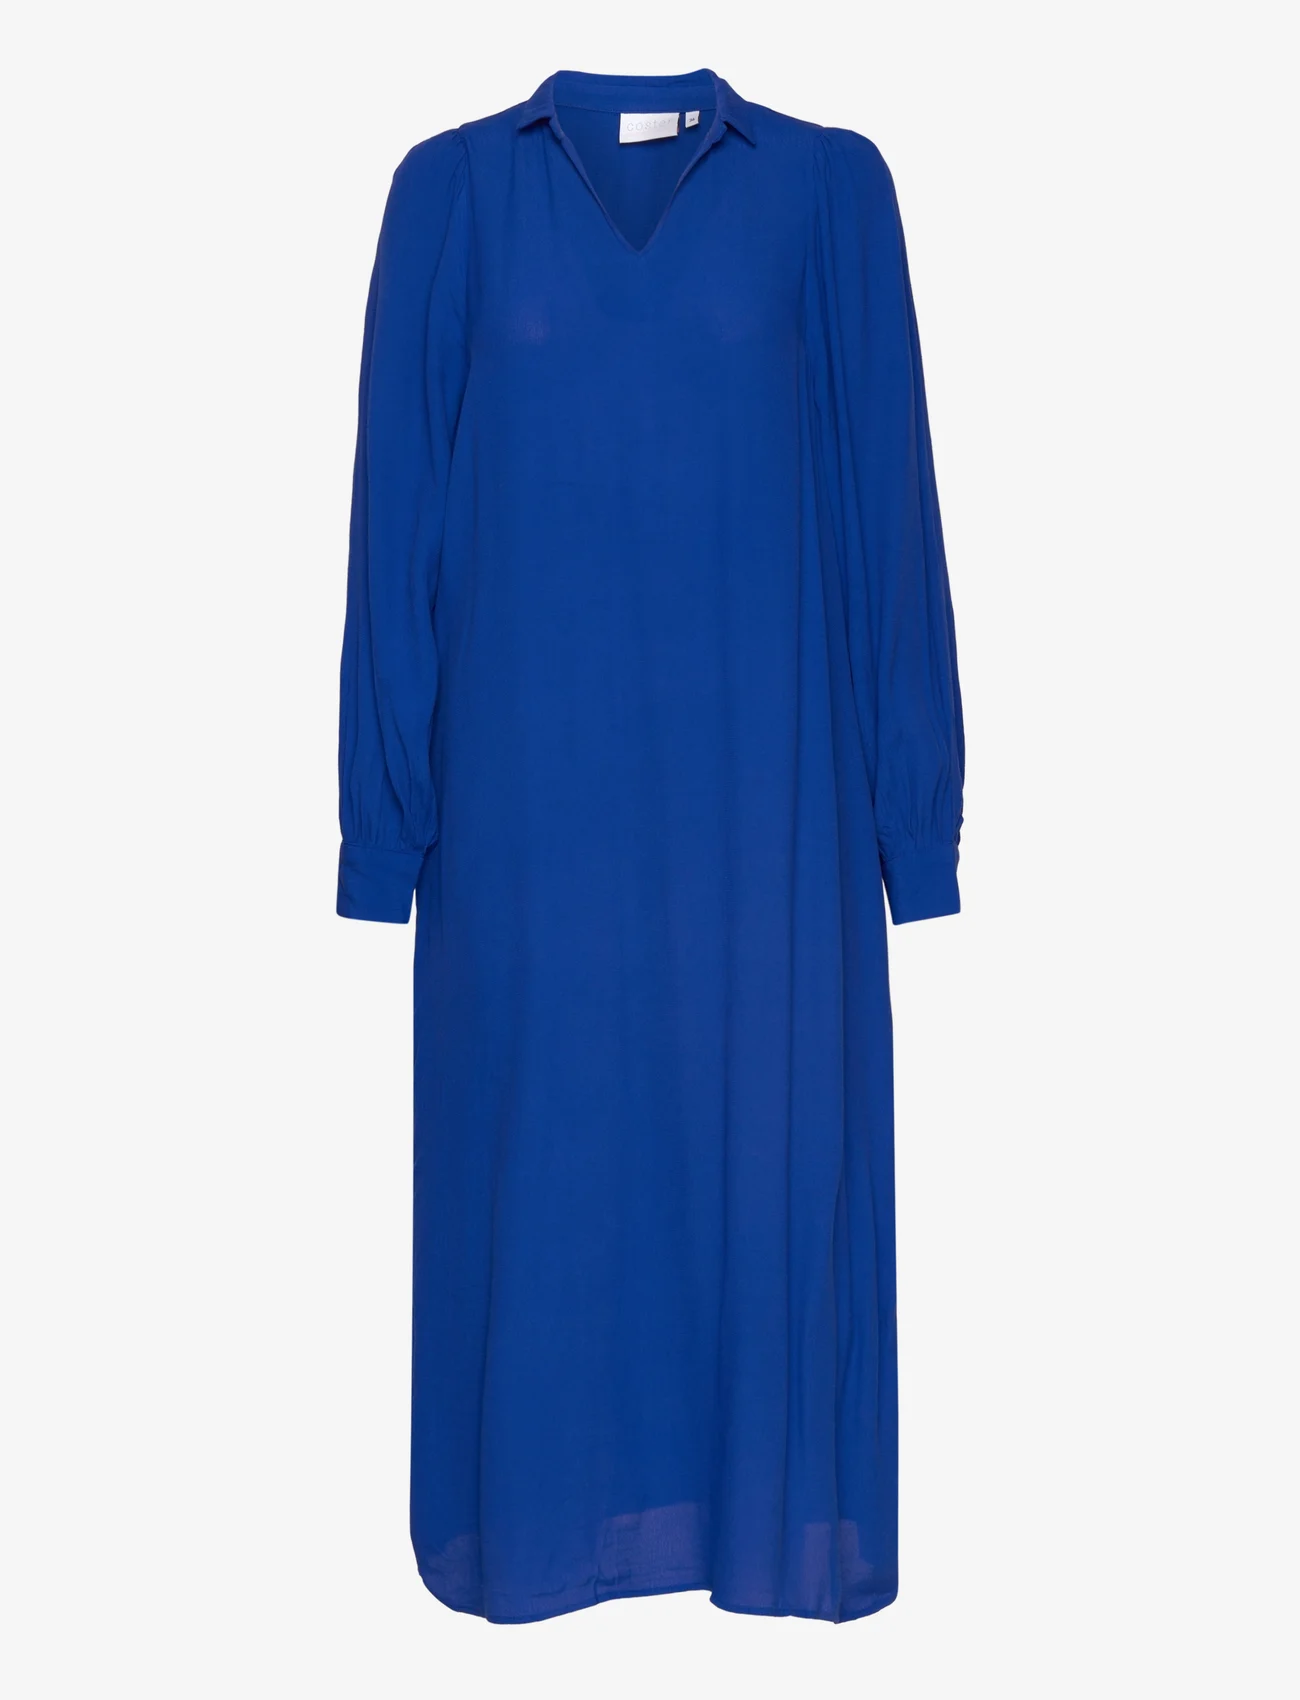 Coster Copenhagen - Dress with wide sleeves - midiklänningar - electric blue - 0